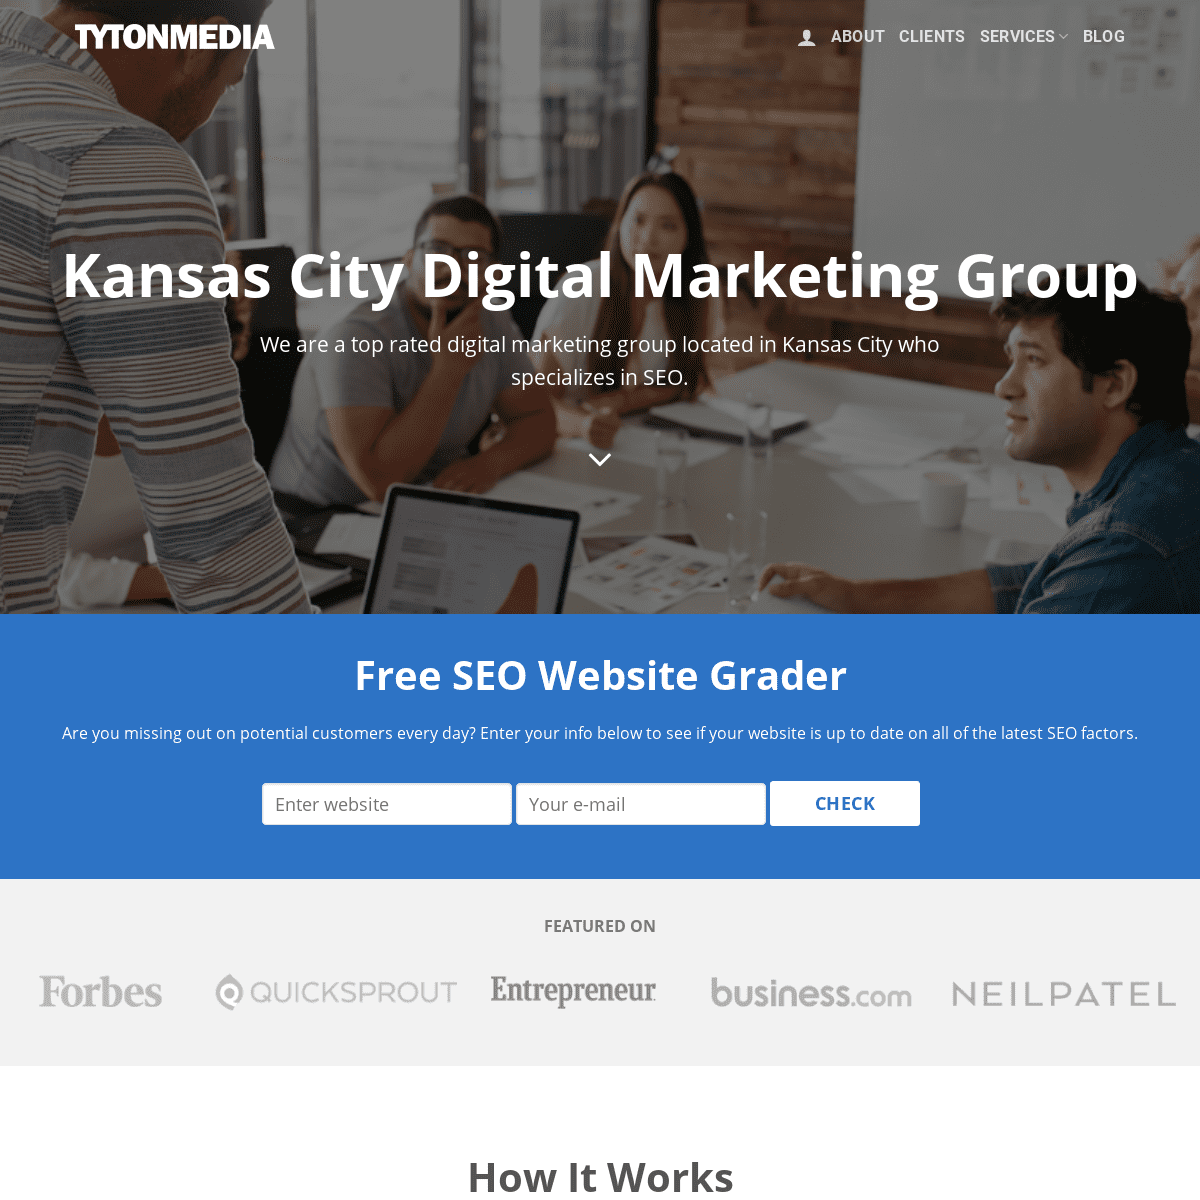 Kansas City Digital Marketing Group · Tyton Media™